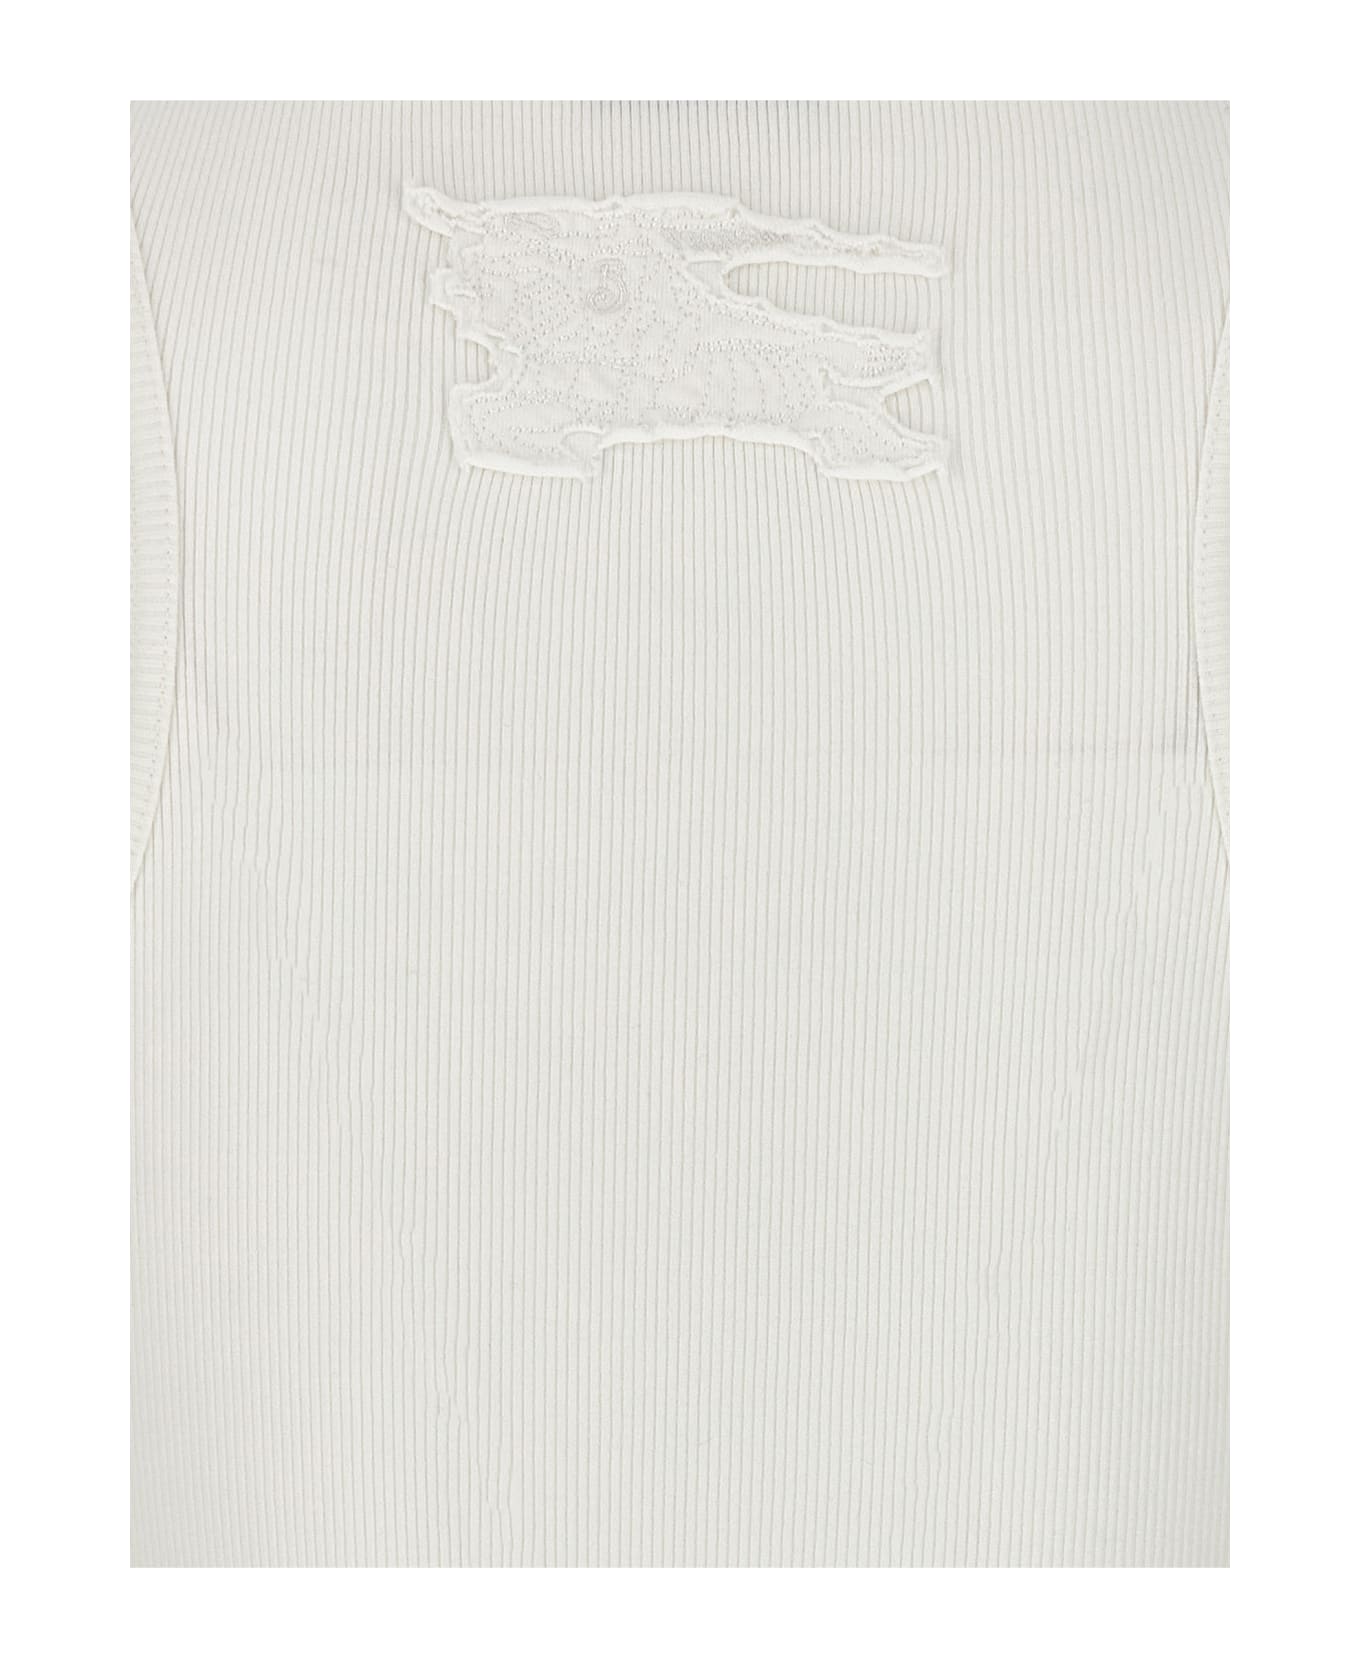 Burberry Logo Embroidery Tank Top - White タンクトップ